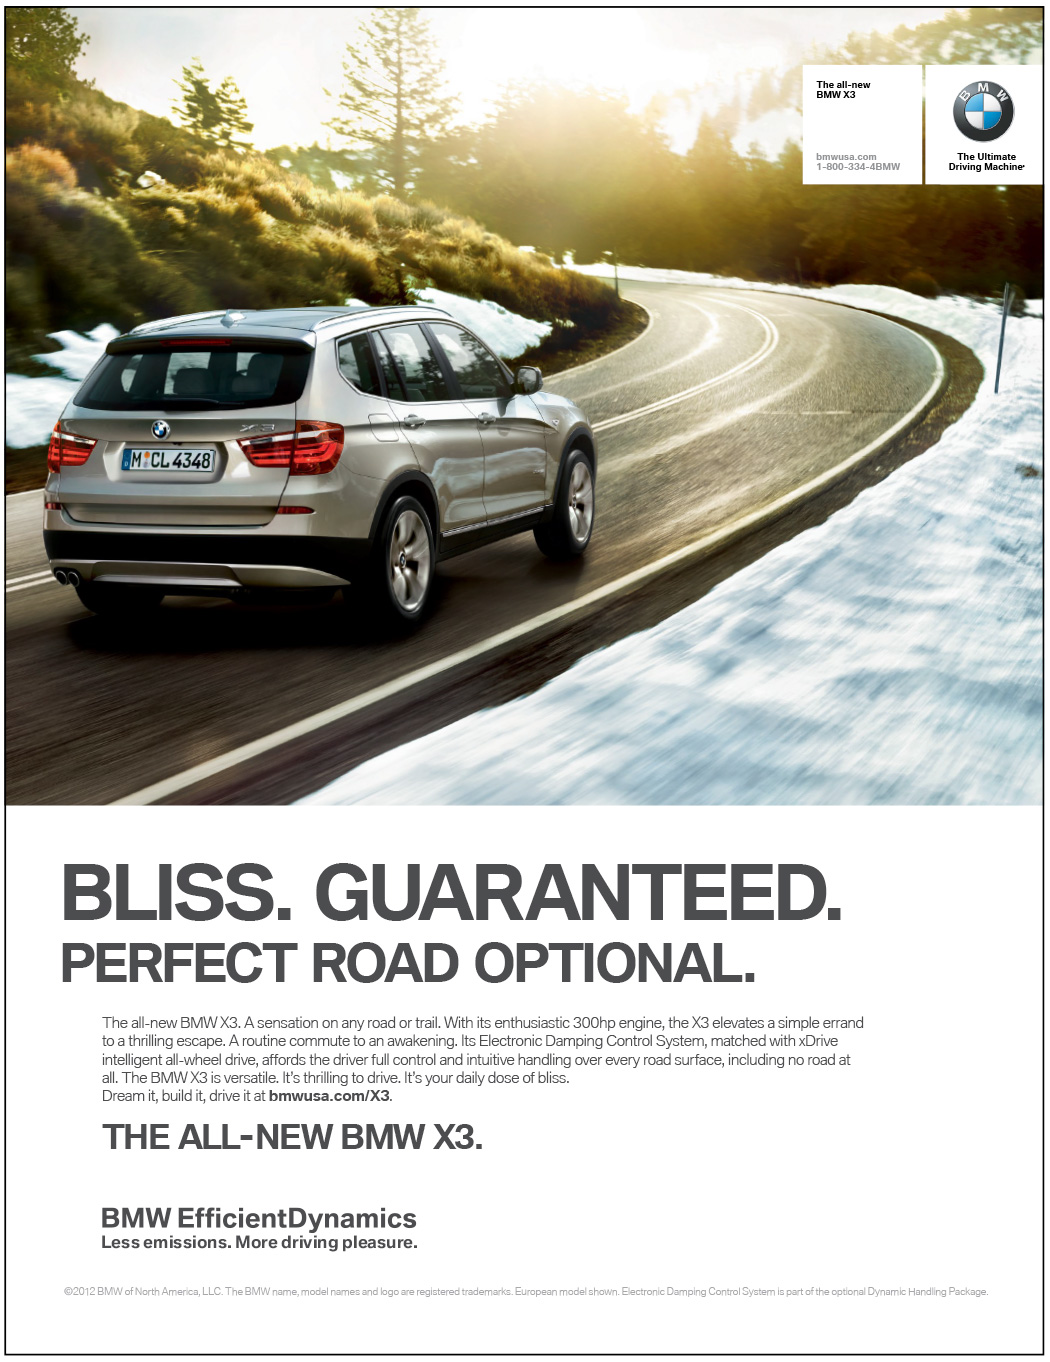 BMW print ad